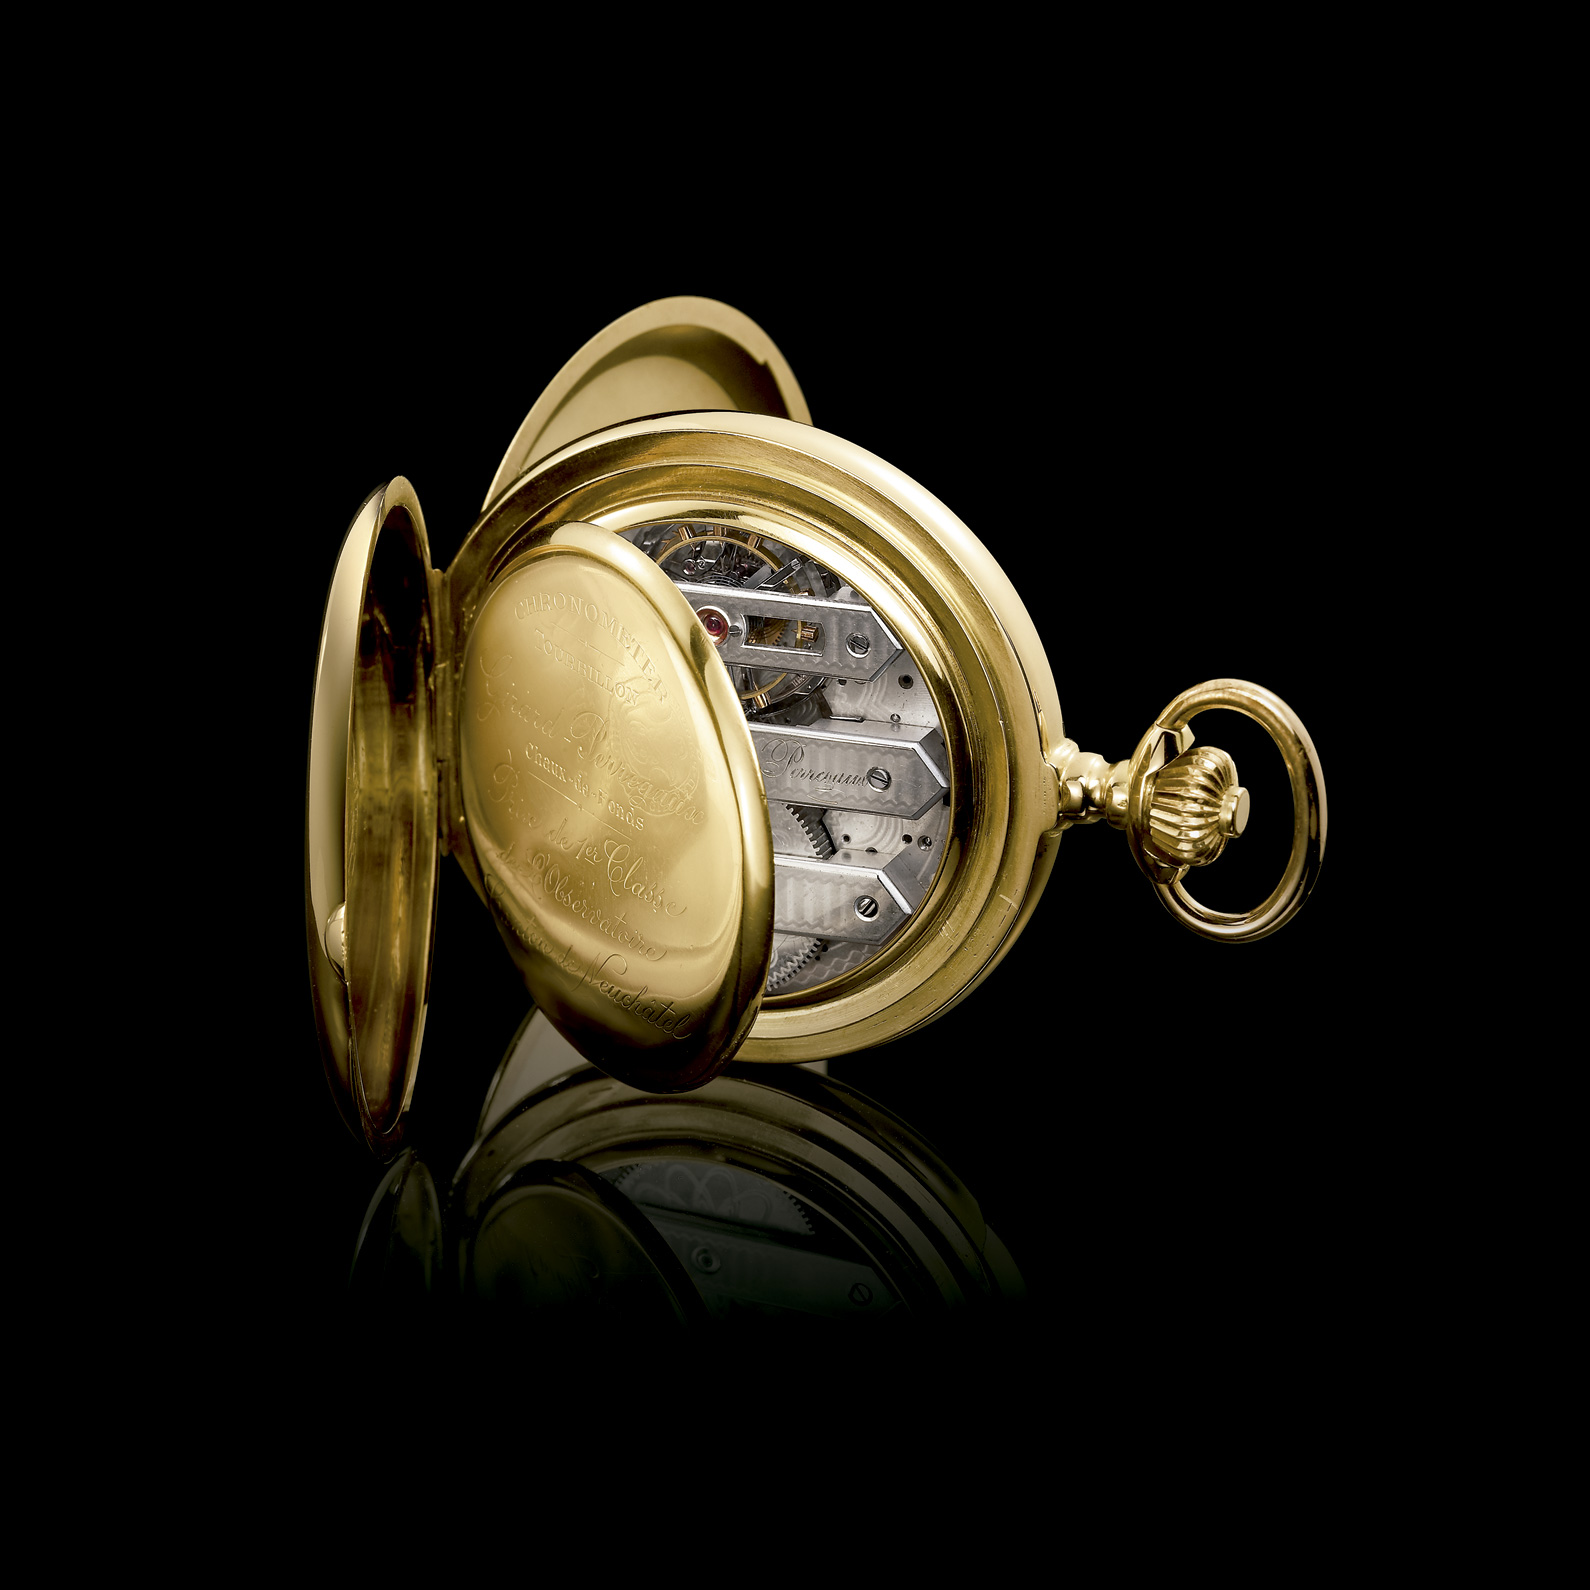 Reloj de bolsillo Girard-Perregaux de 1860